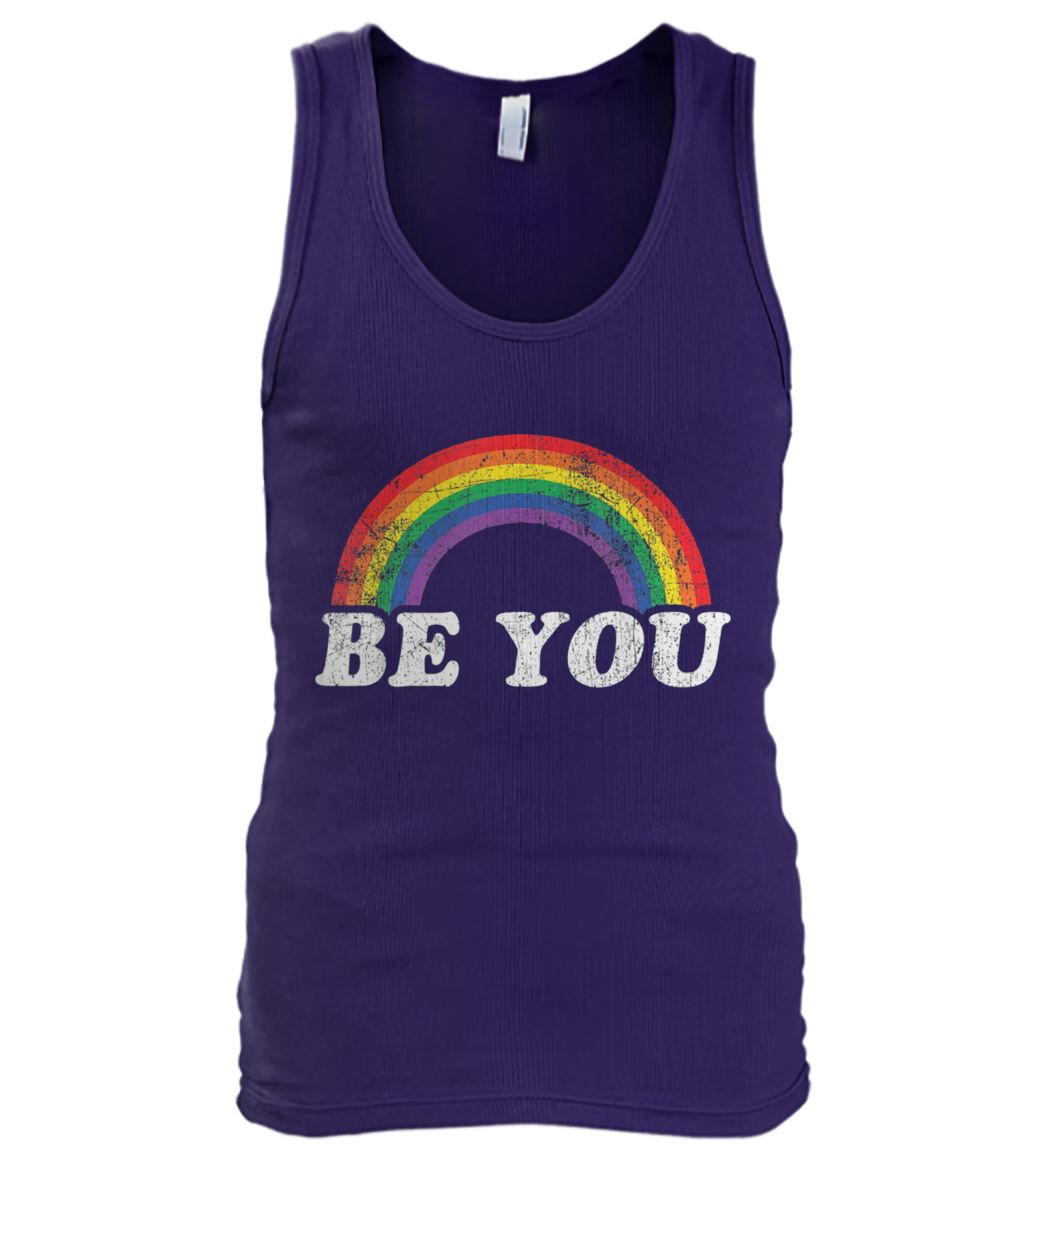 Be you gay LGBT pride rainbow men's tank top